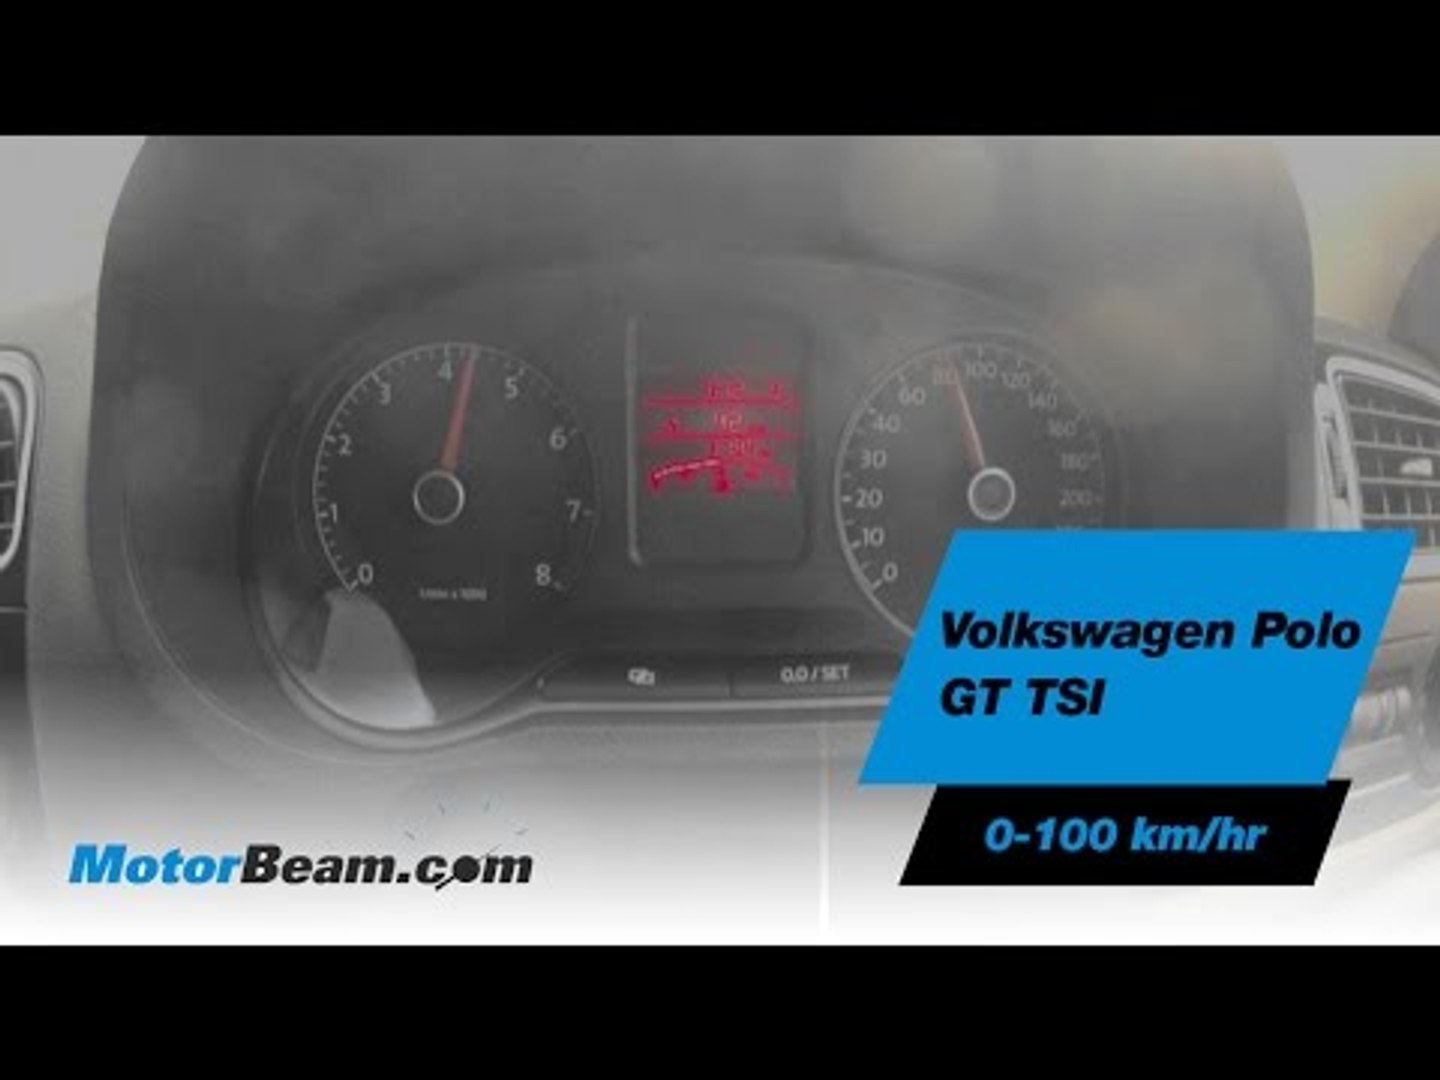 Volkswagen Polo GT TSI 0-100 km/hr - video Dailymotion